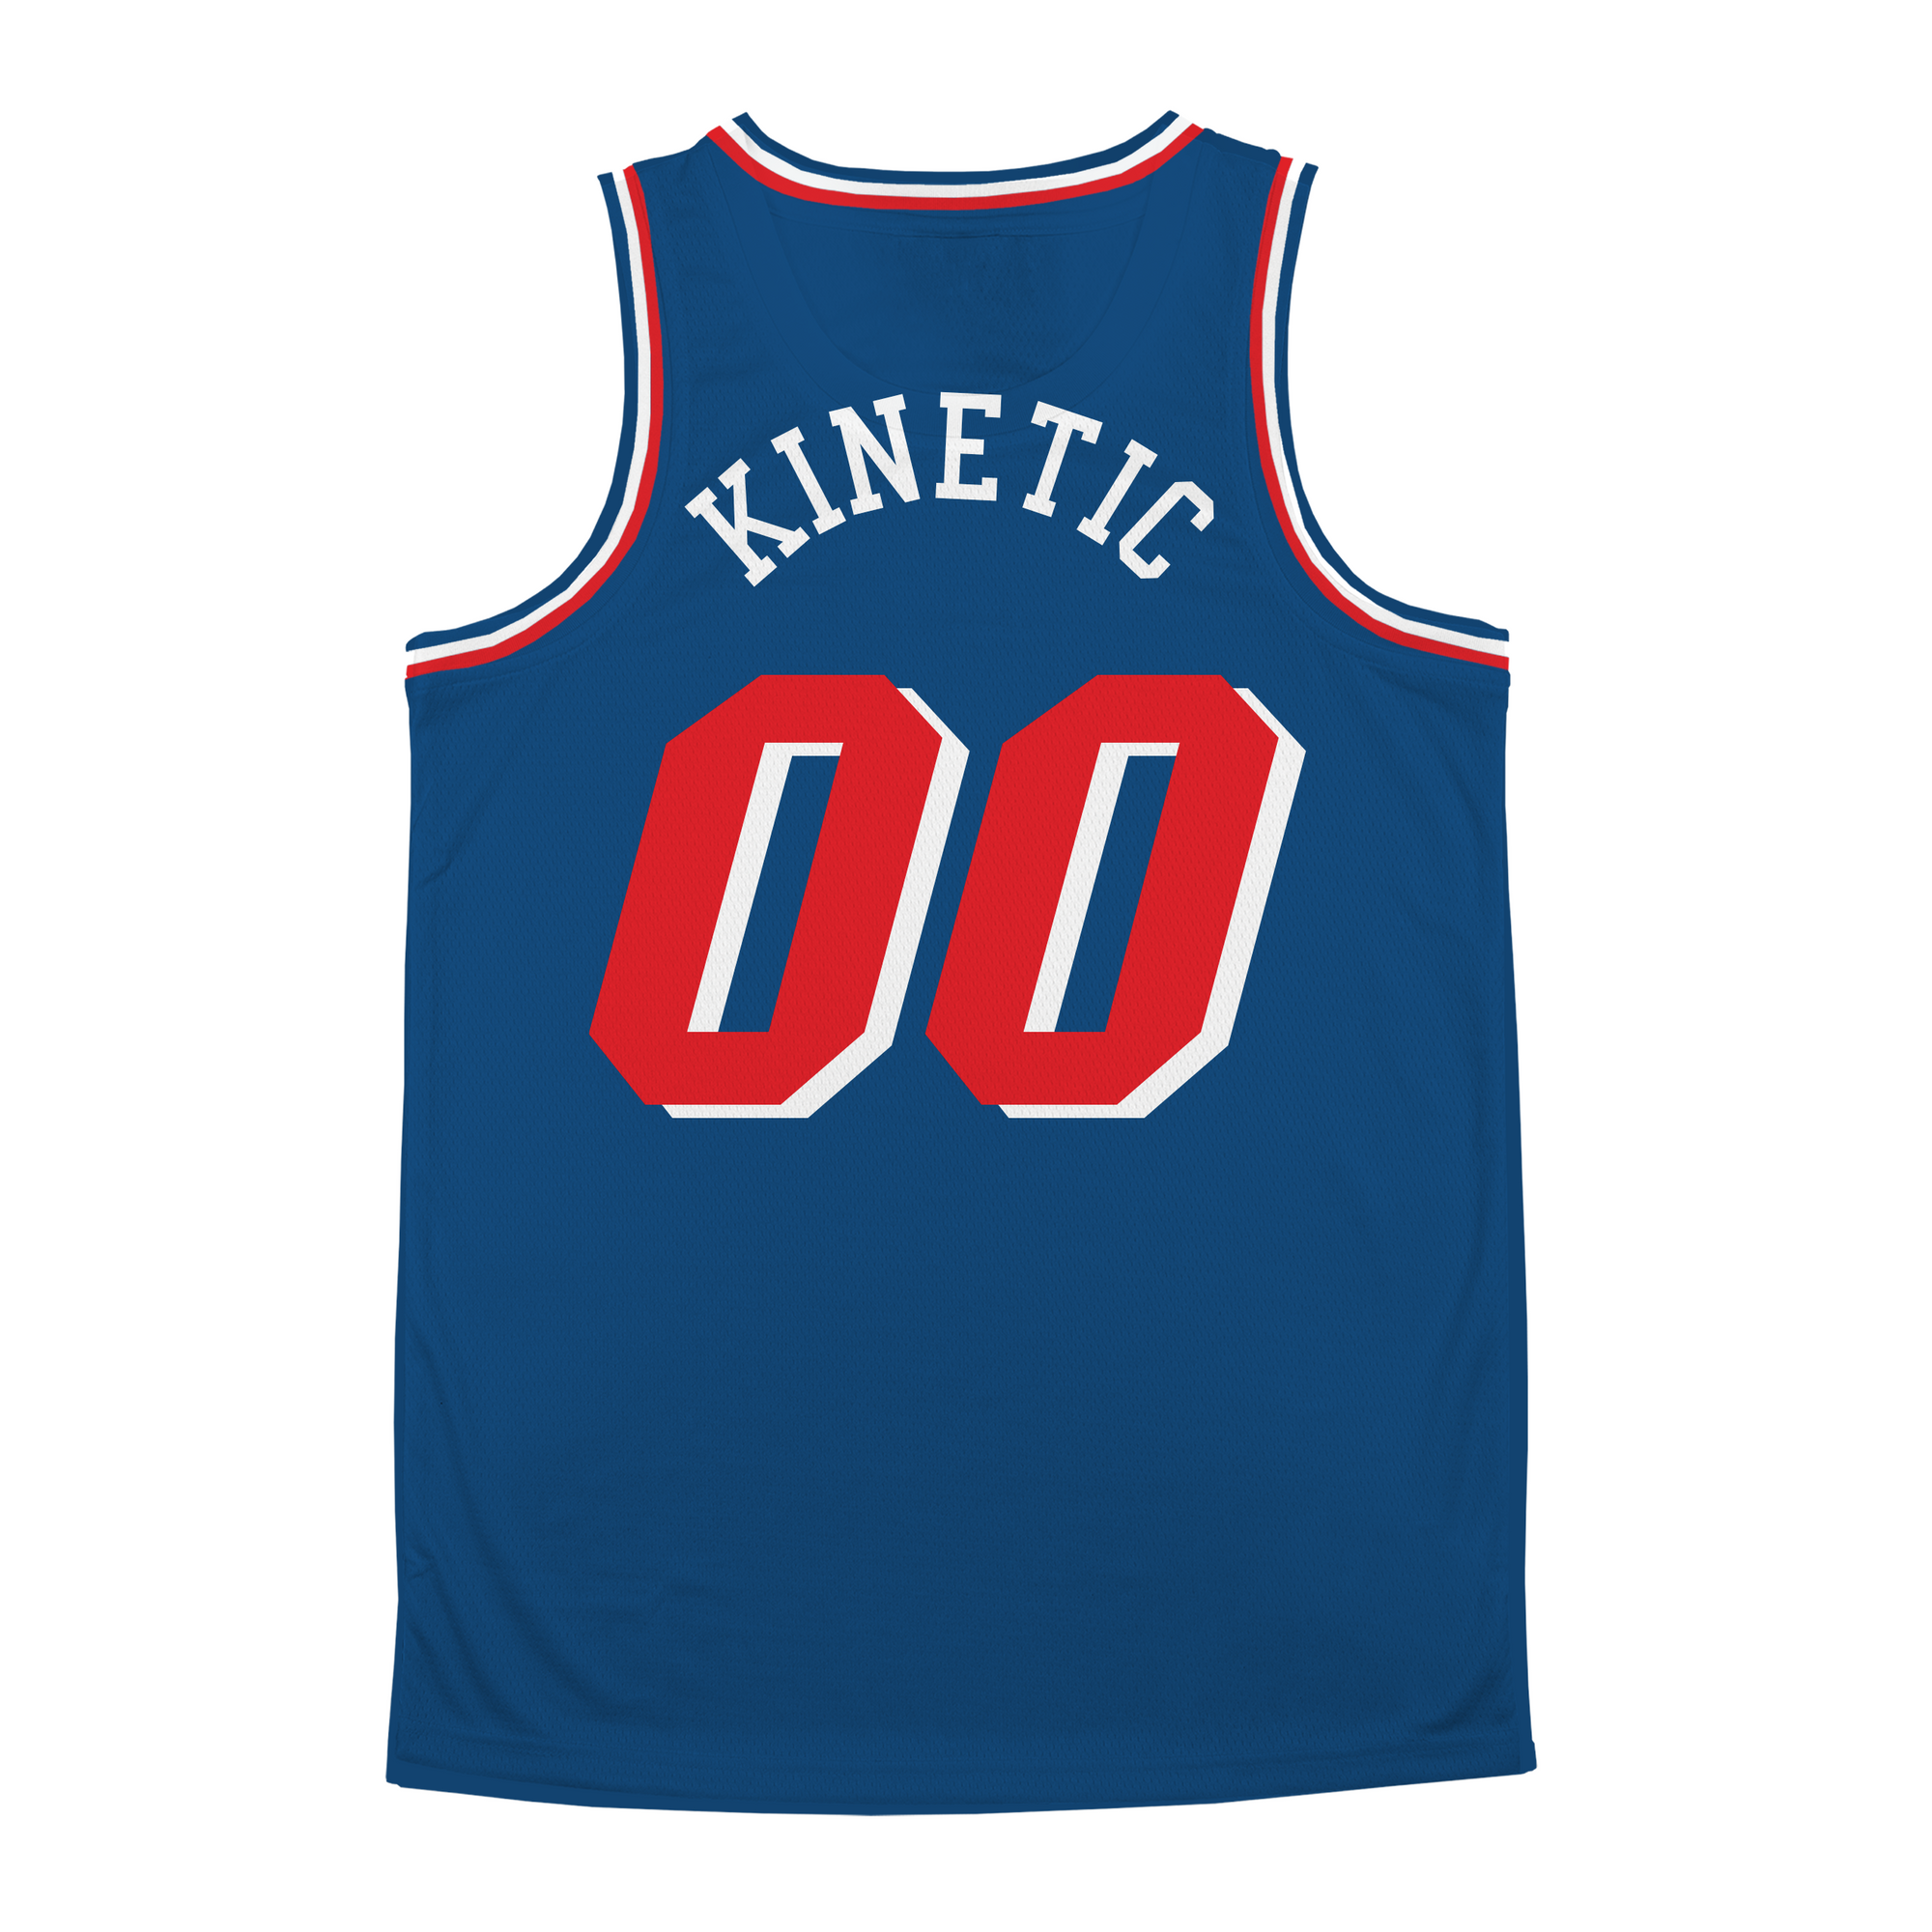 Phi Kappa Tau - The Dream Basketball Jersey